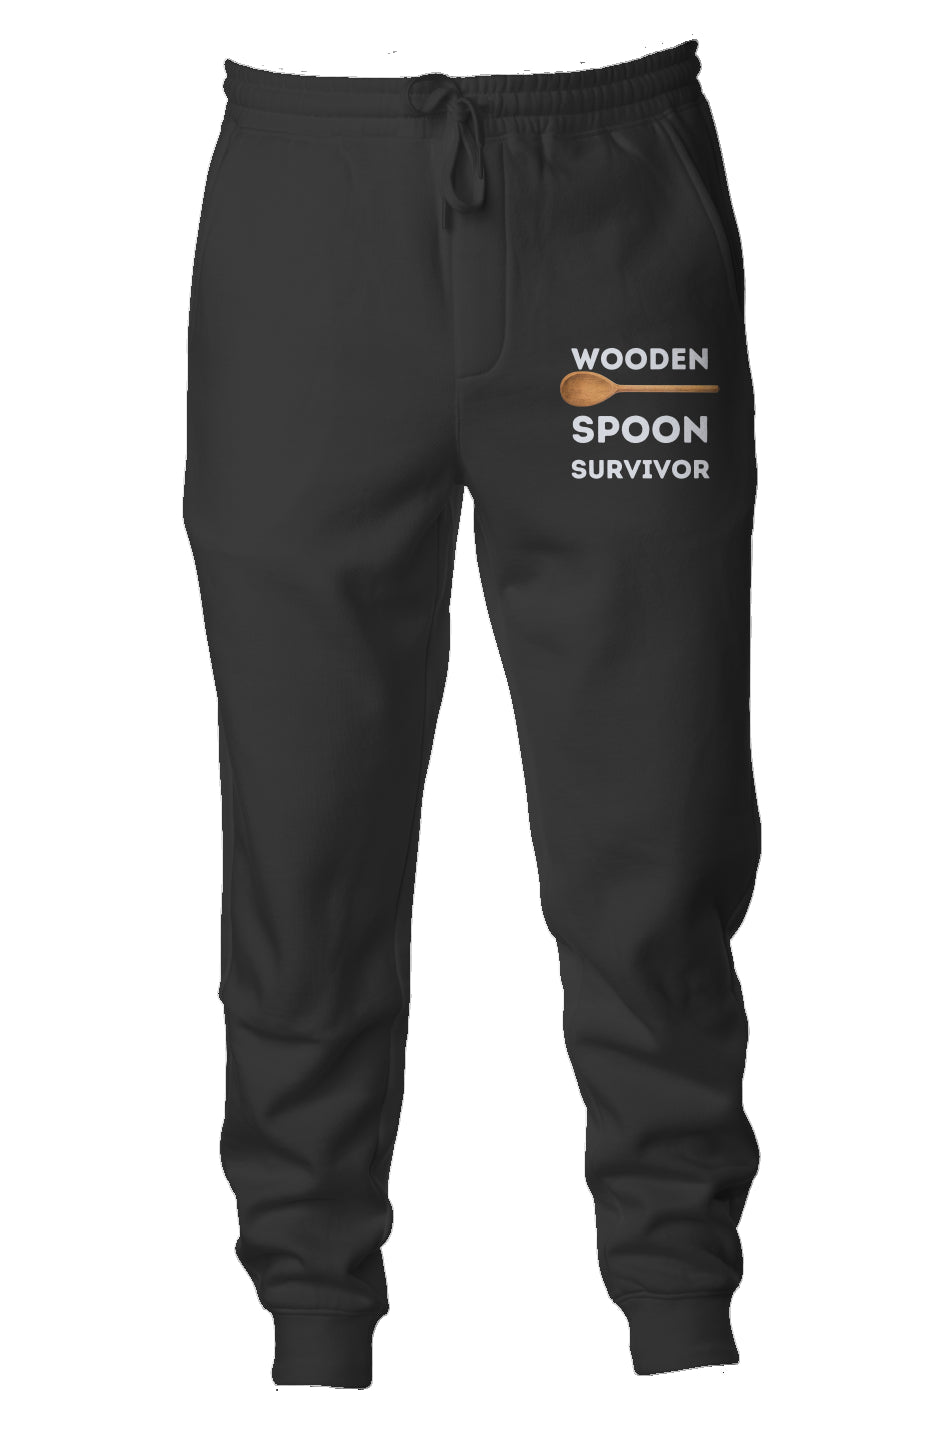 Wooden Spoon Survivor Sweatpants